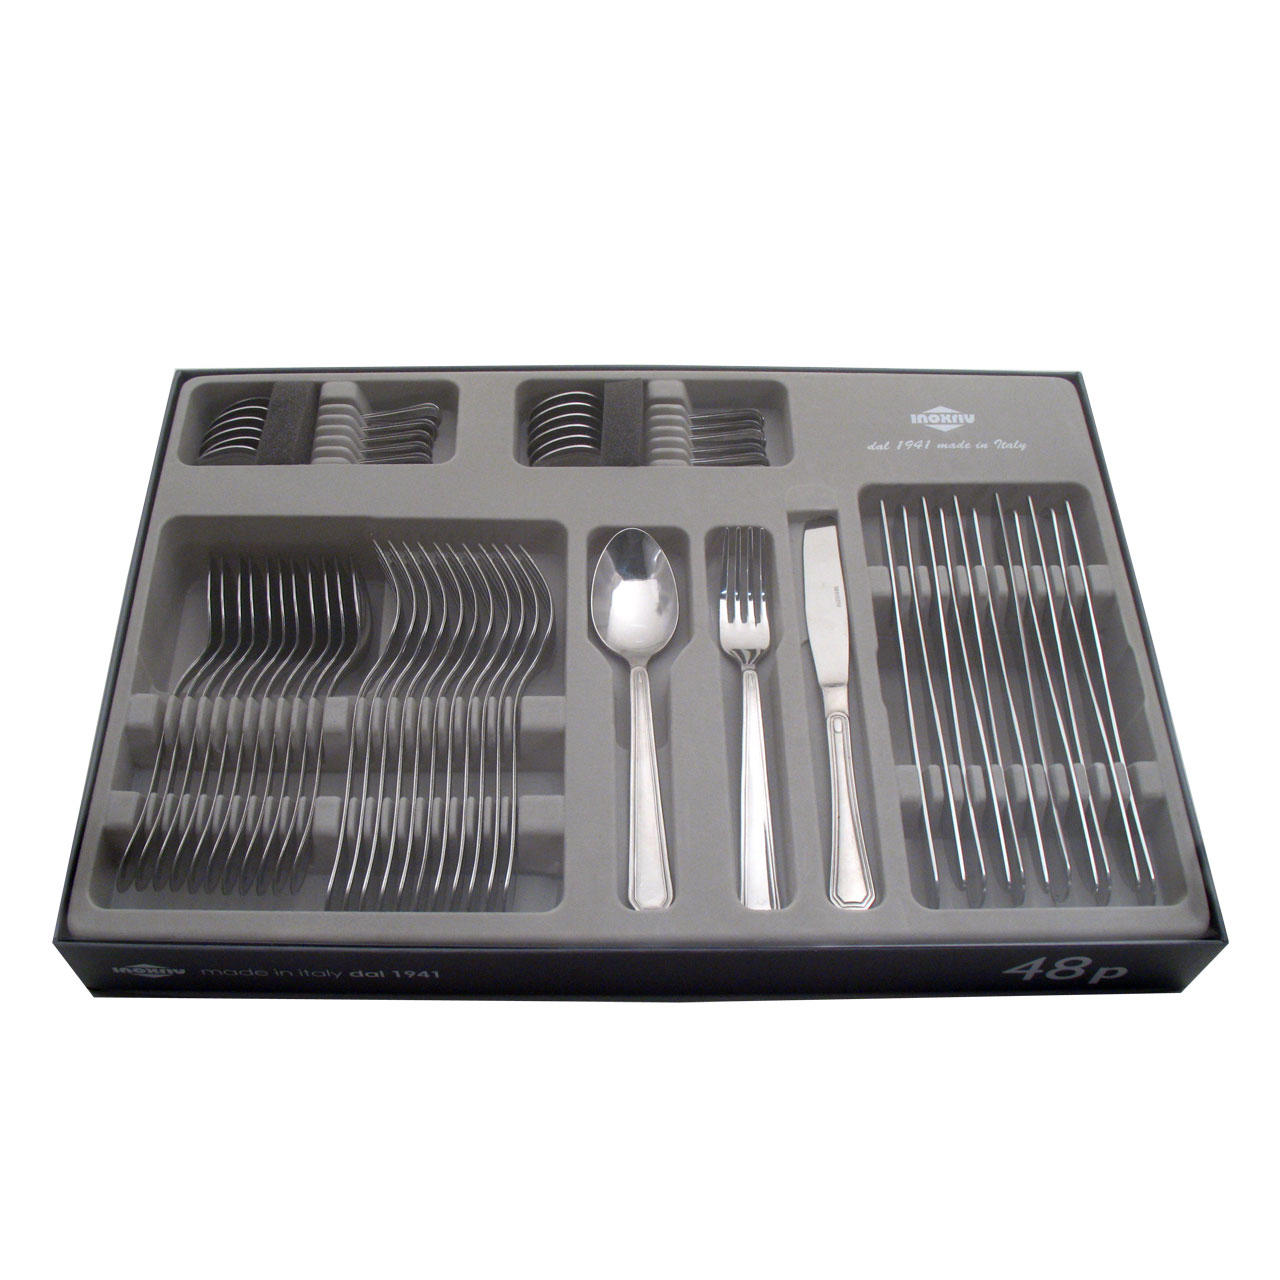 67460048 48 pcs. cutlery set Design Window Box 